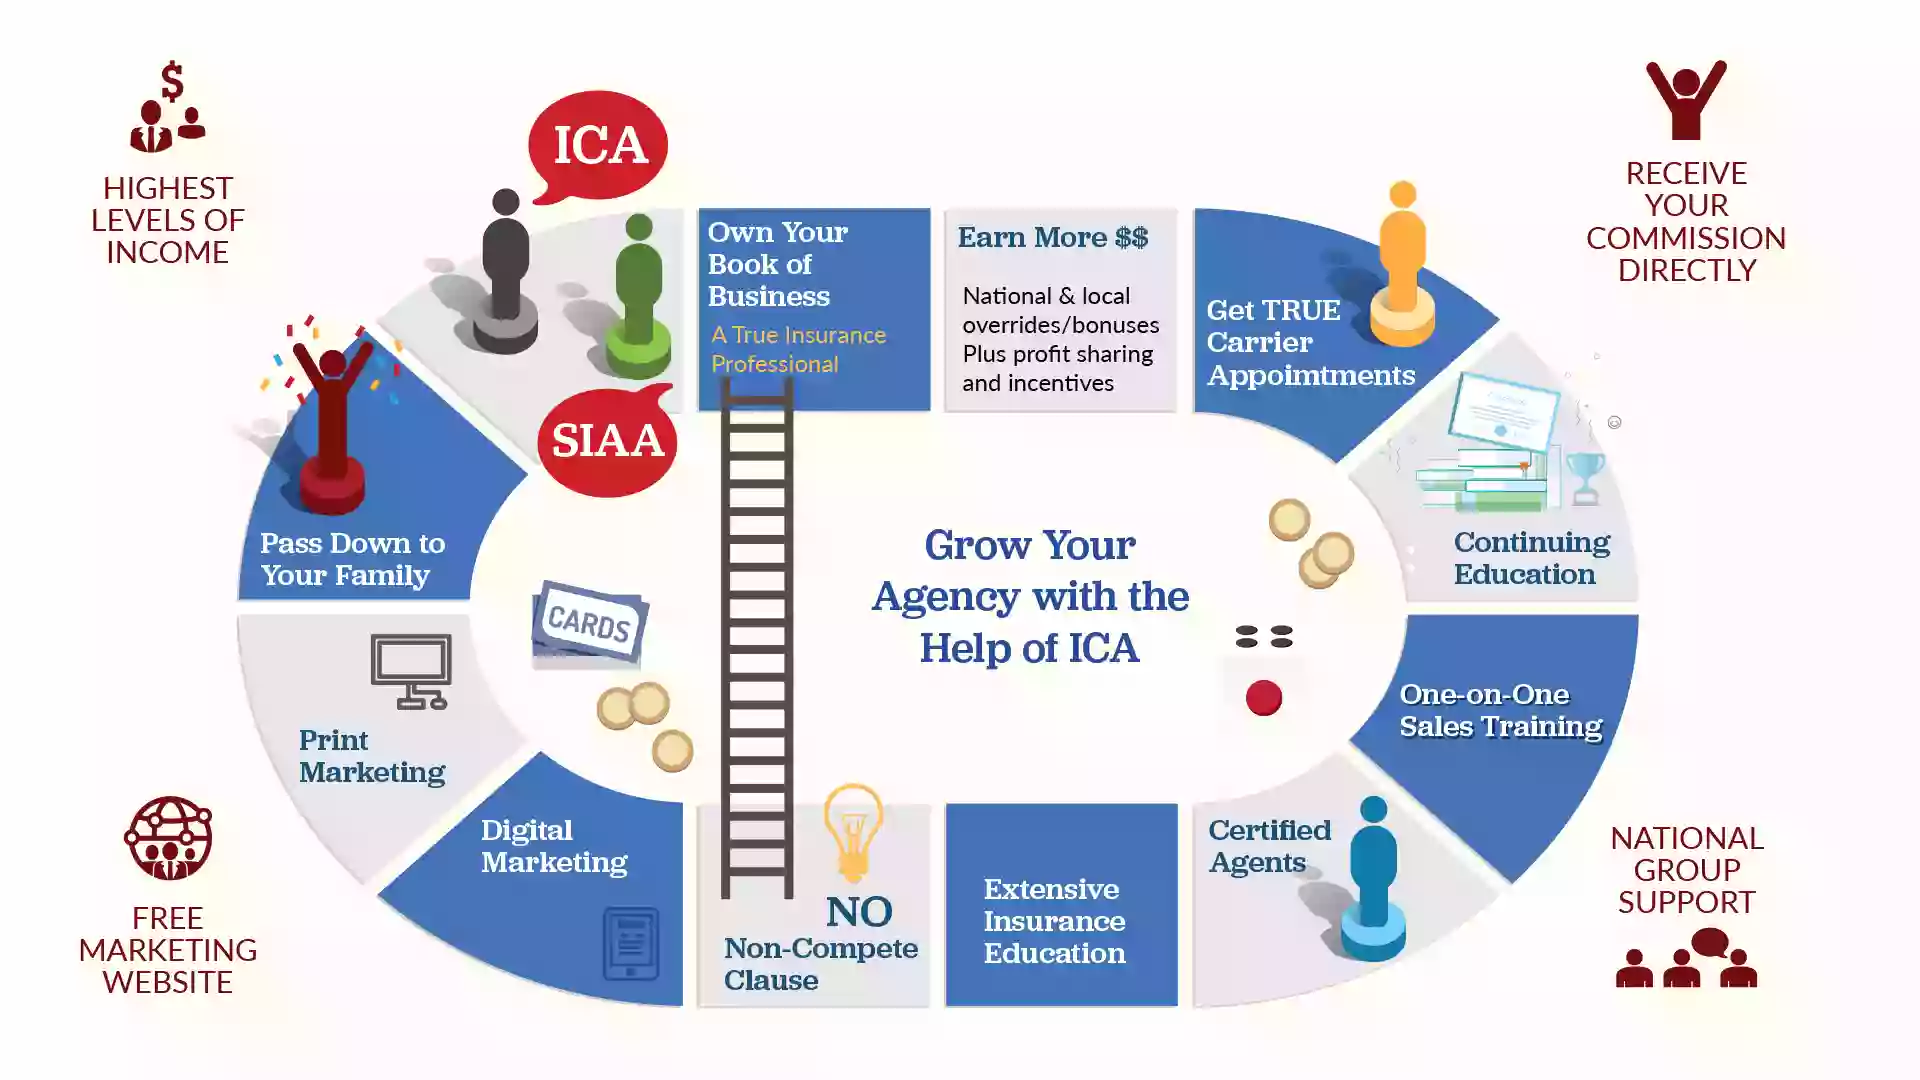 ICA Agency Alliance